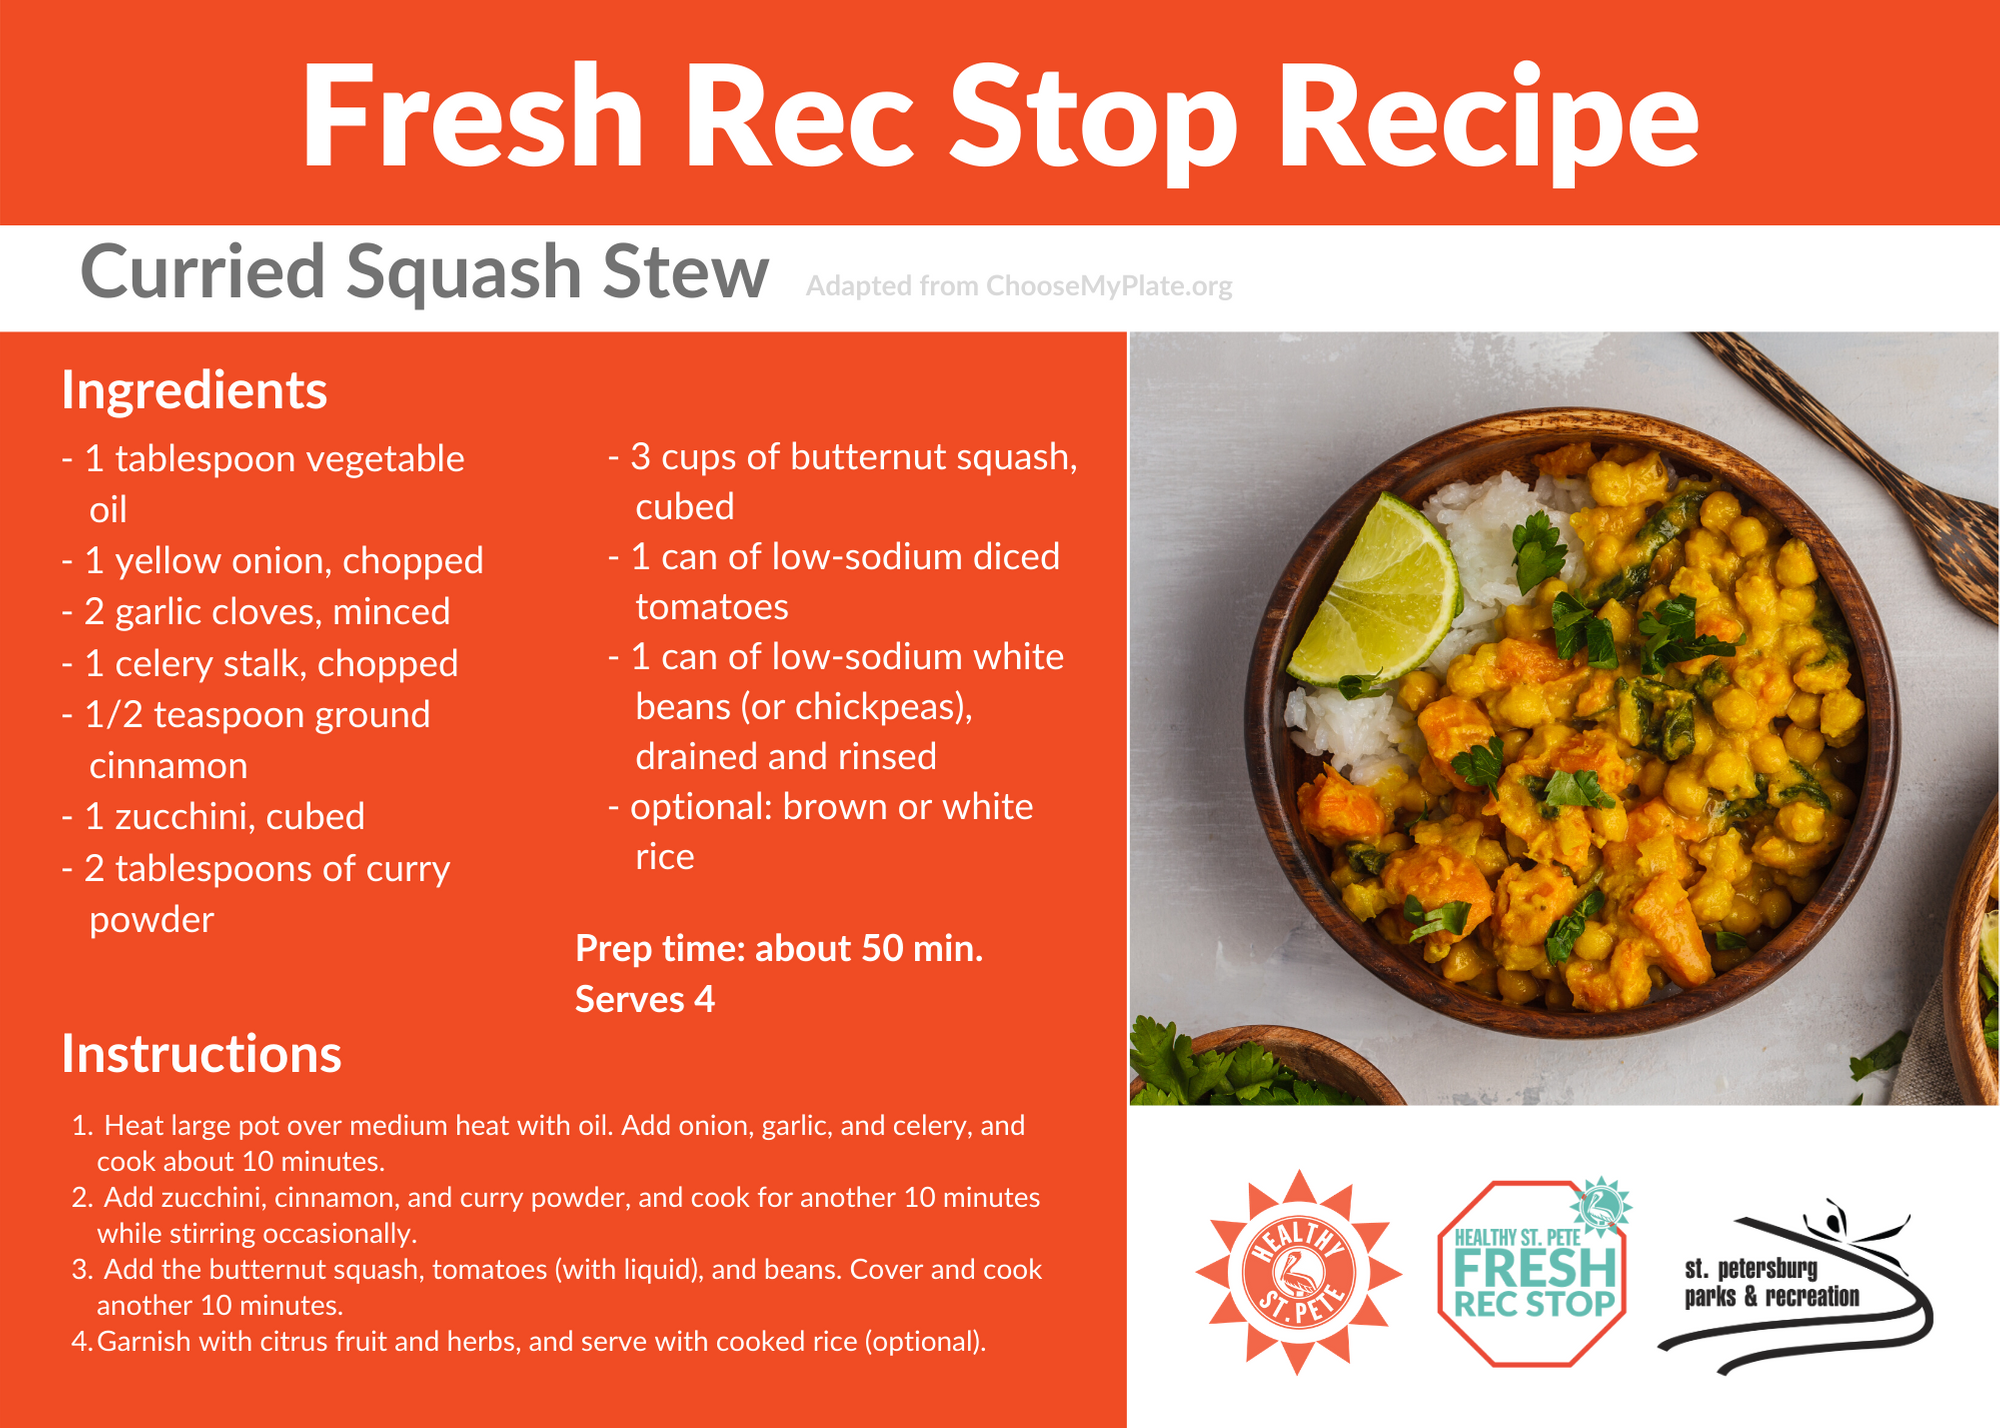 Curried Squash Stew recipe